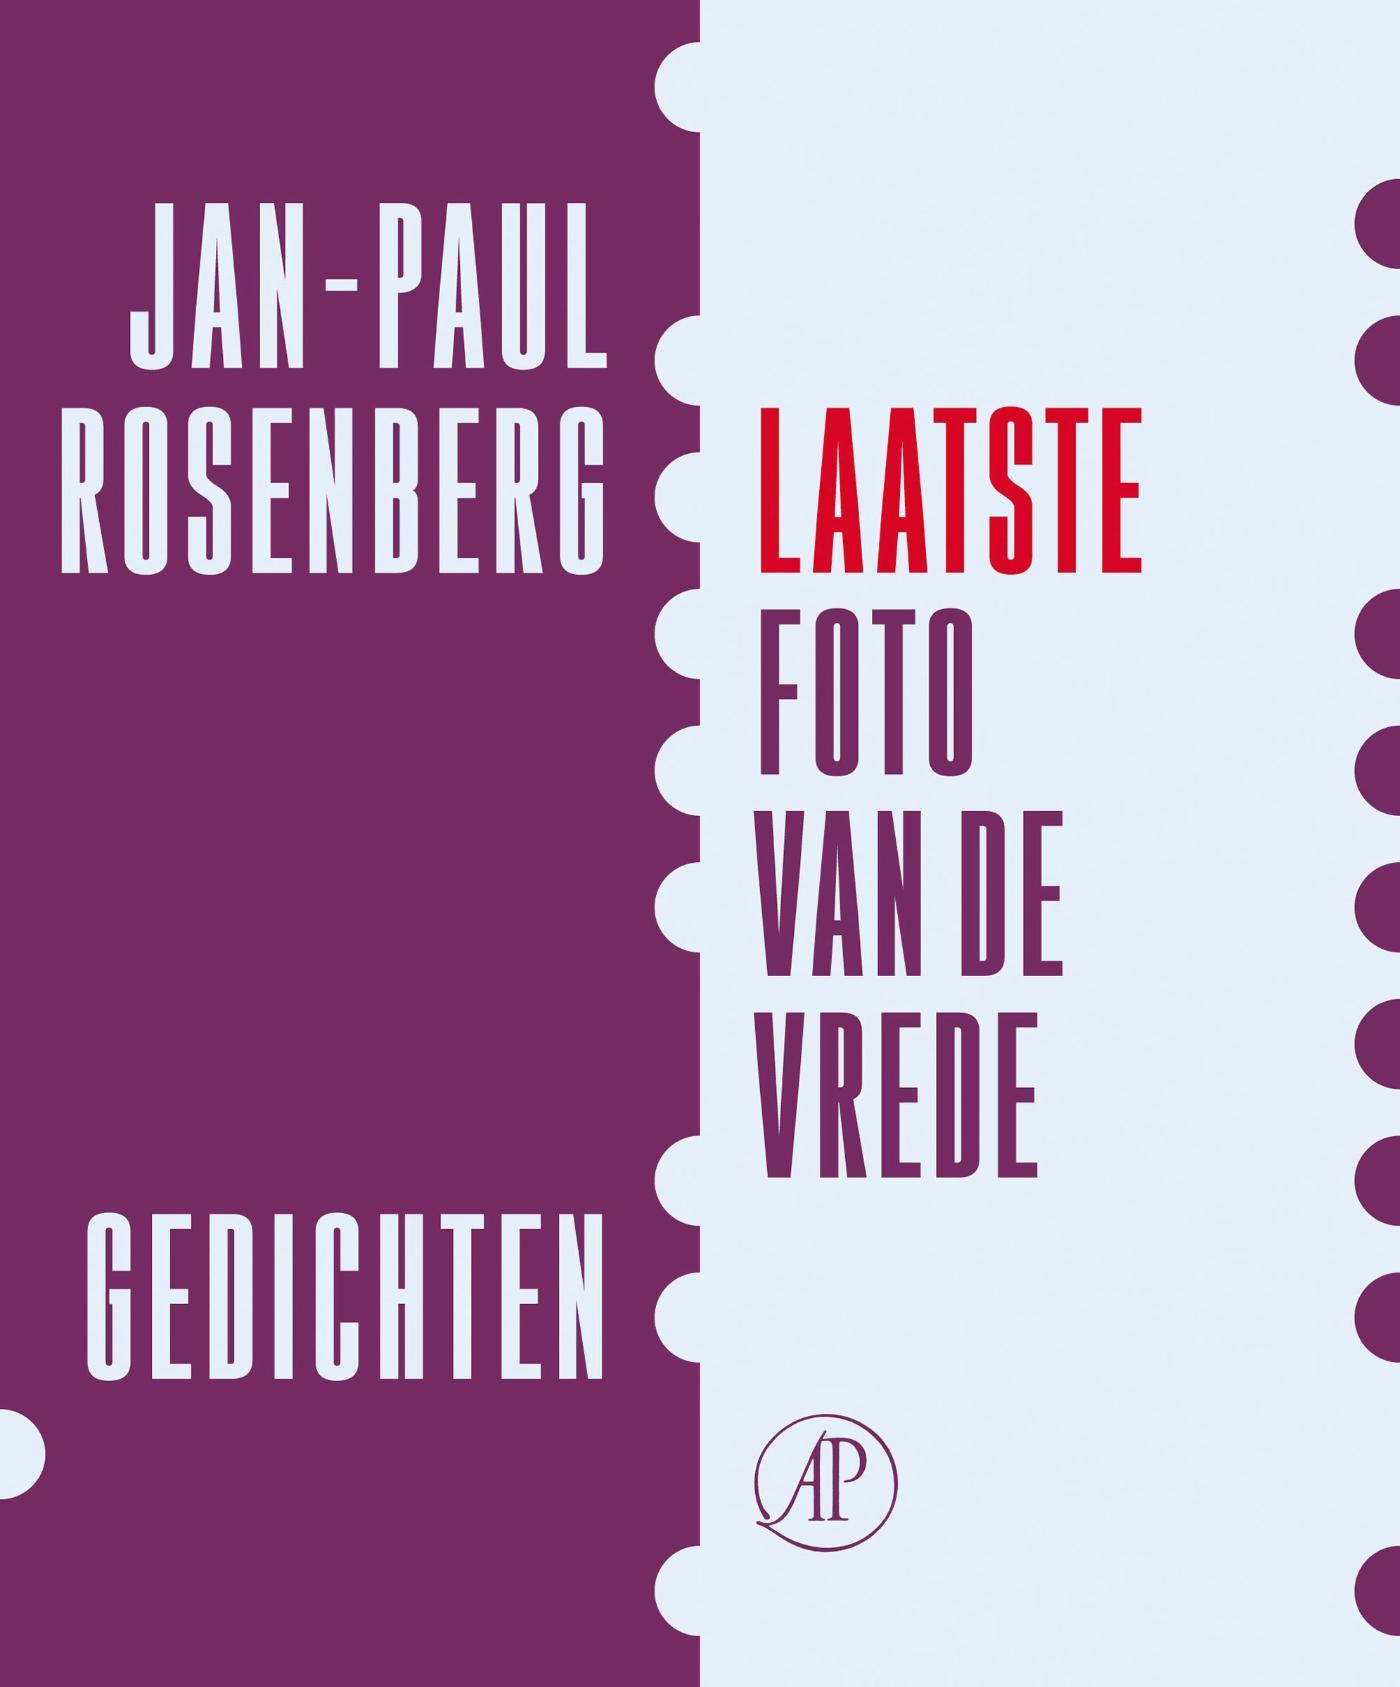 Boekpresentatie Jan-Paul Rosenberg